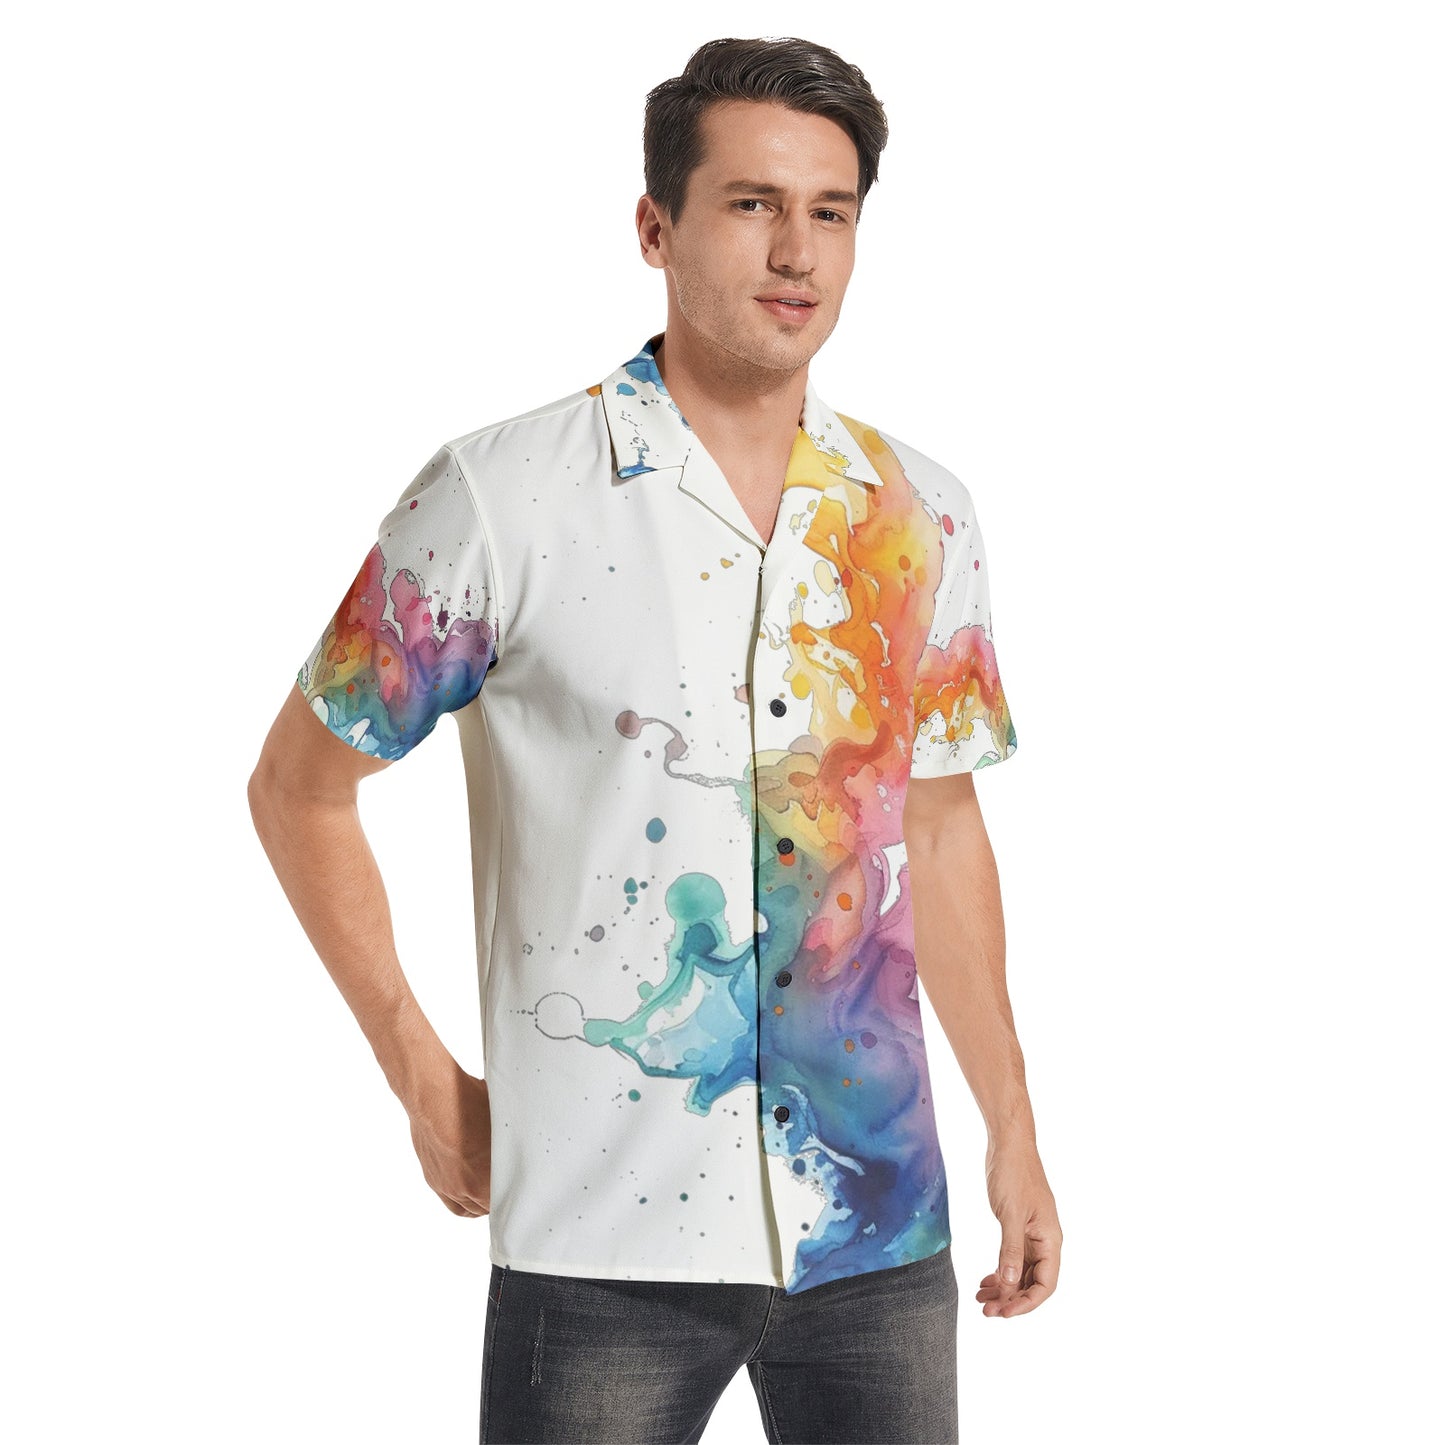 Men's All-over print Short Sleeve Shirts